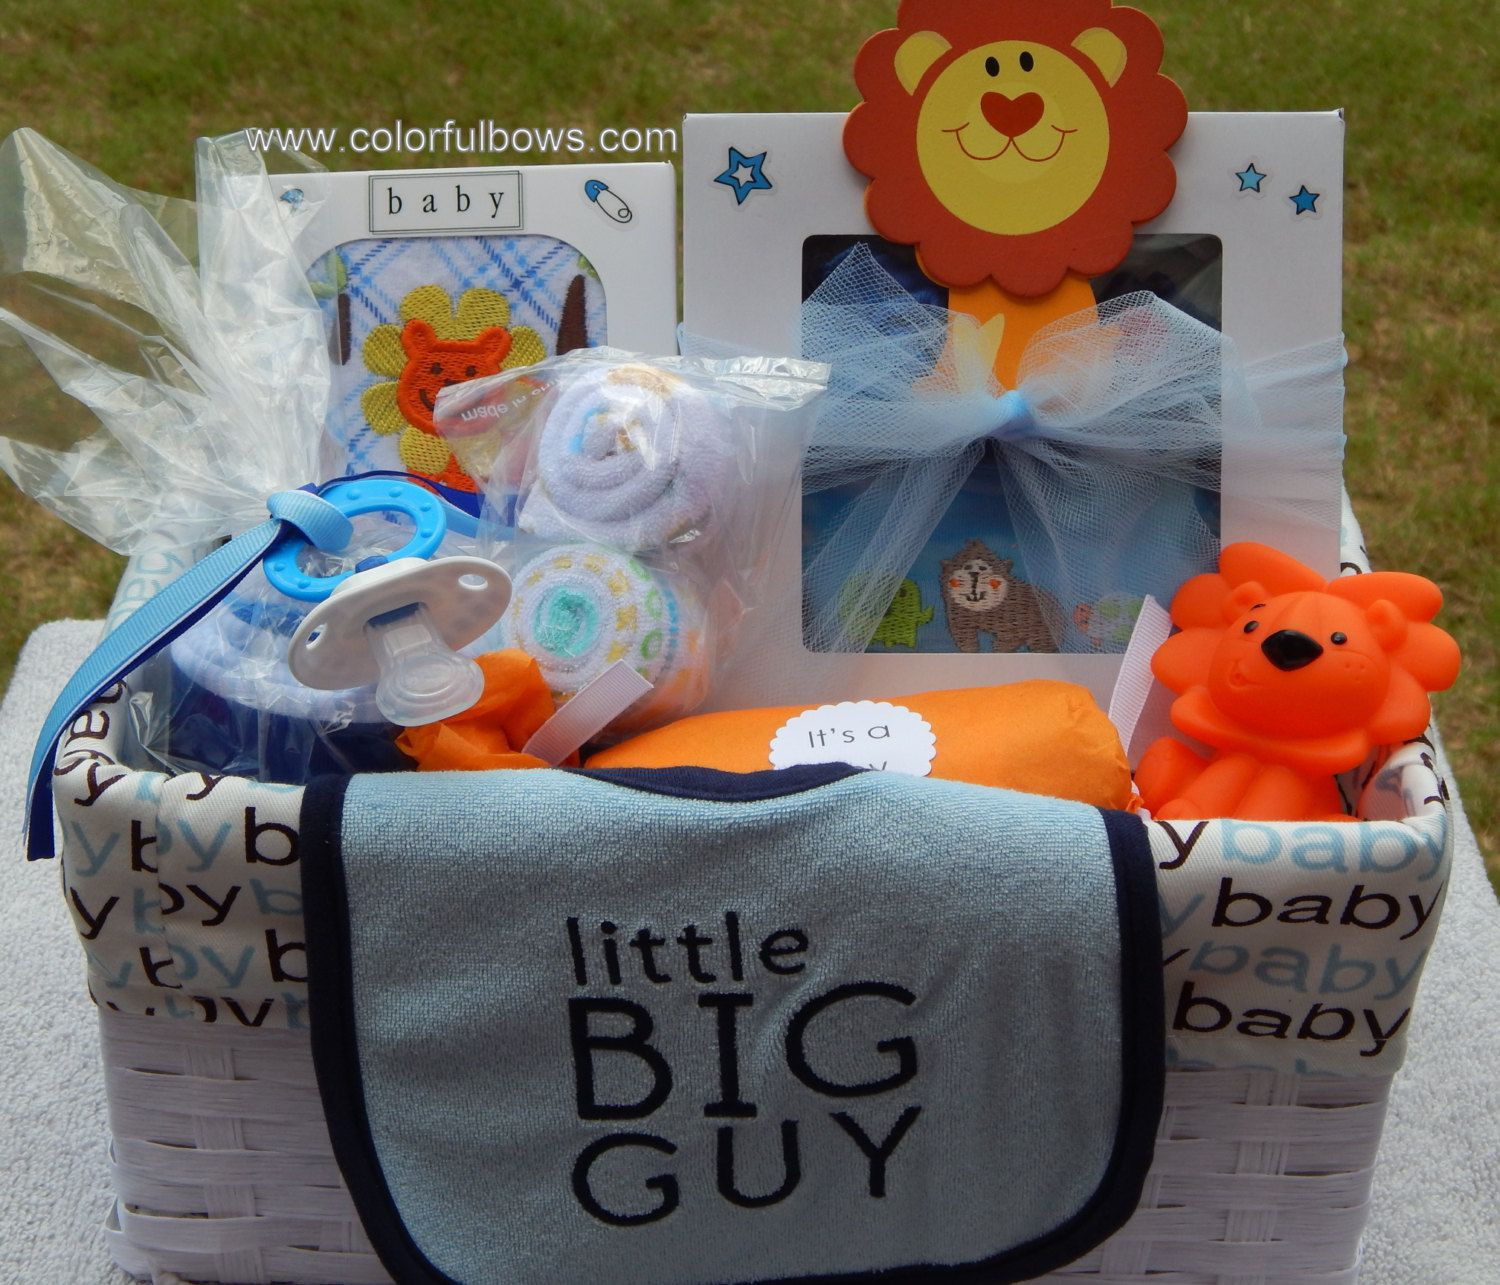 Toddler Boys Gift Ideas
 Premium Little Big Guy Baby Boy Gift Basket READY TO